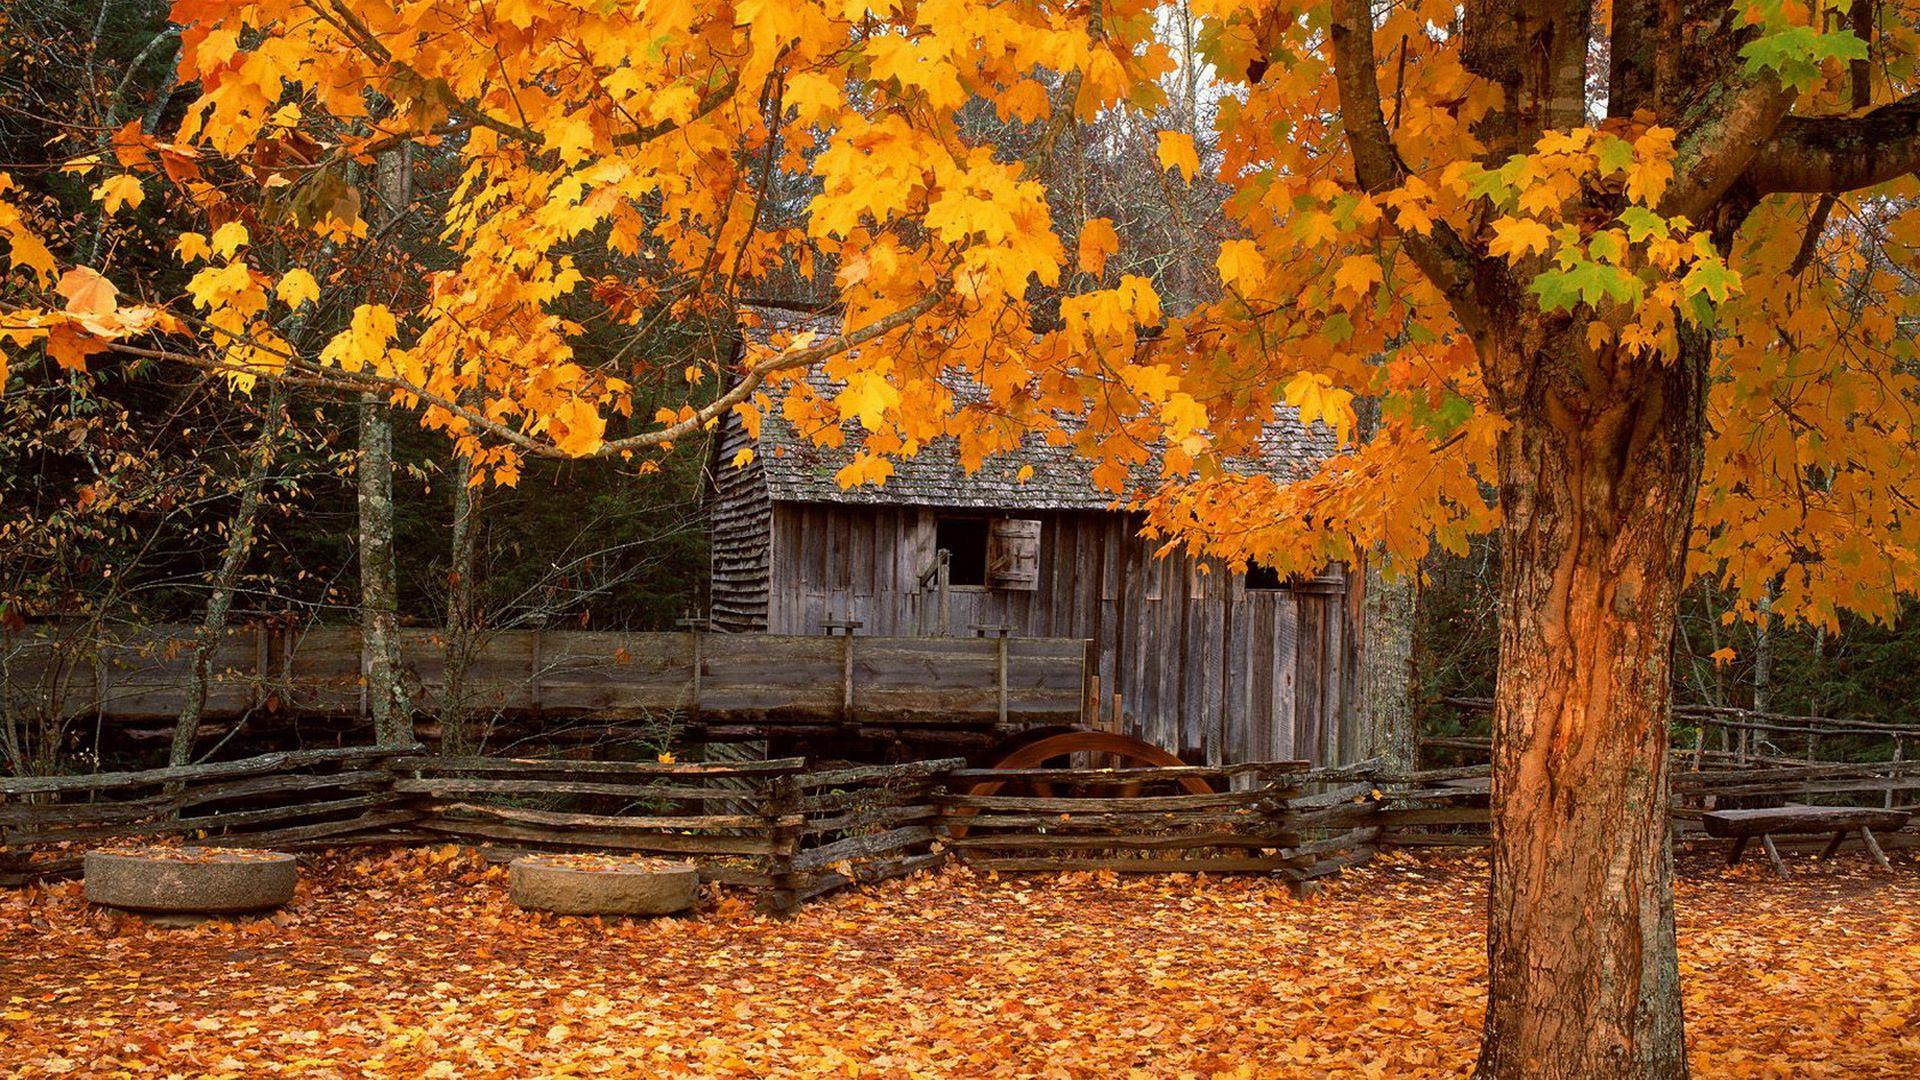 Autumn Season HD Wallpaper Free Download. Autumn scenery, Fall